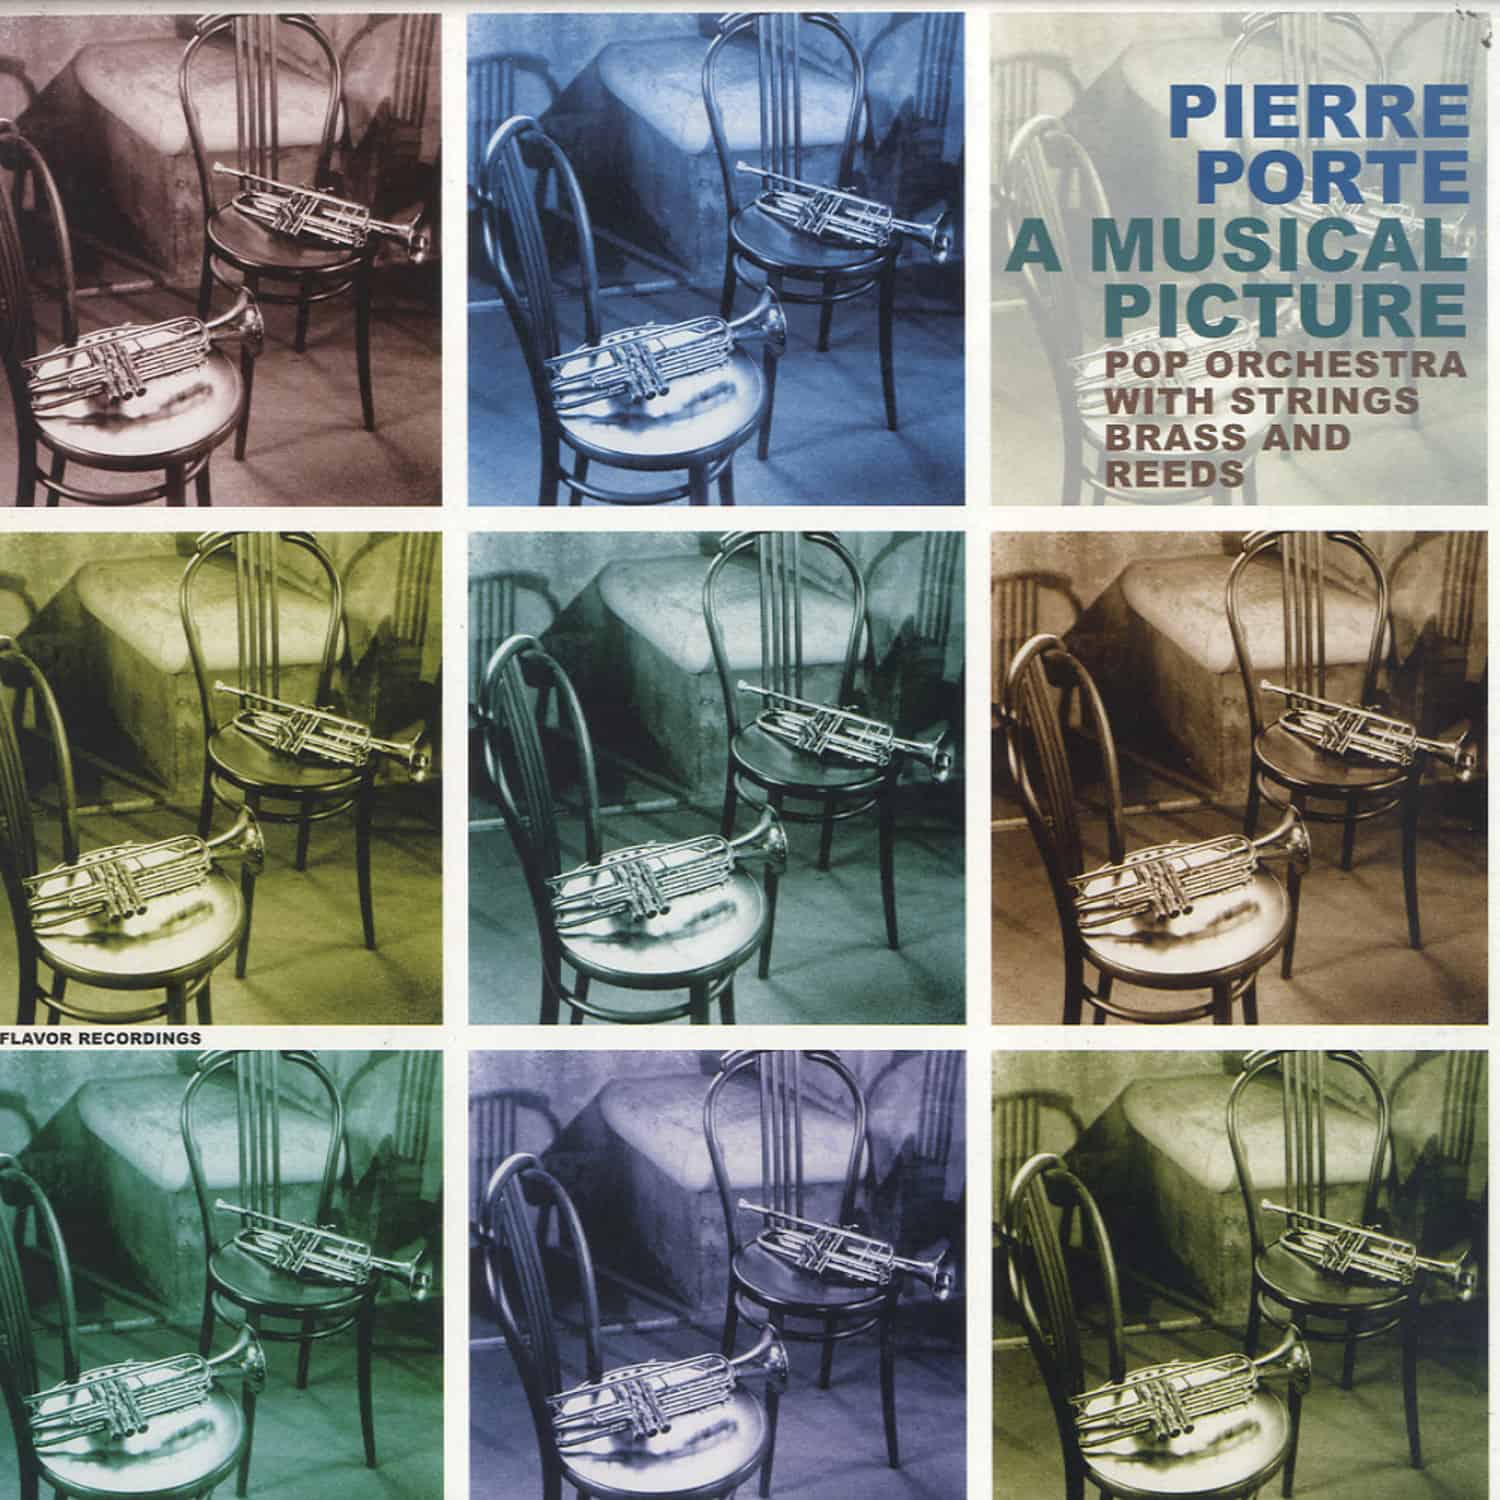 Pierre Porte - A MUSICAL PICTURE 